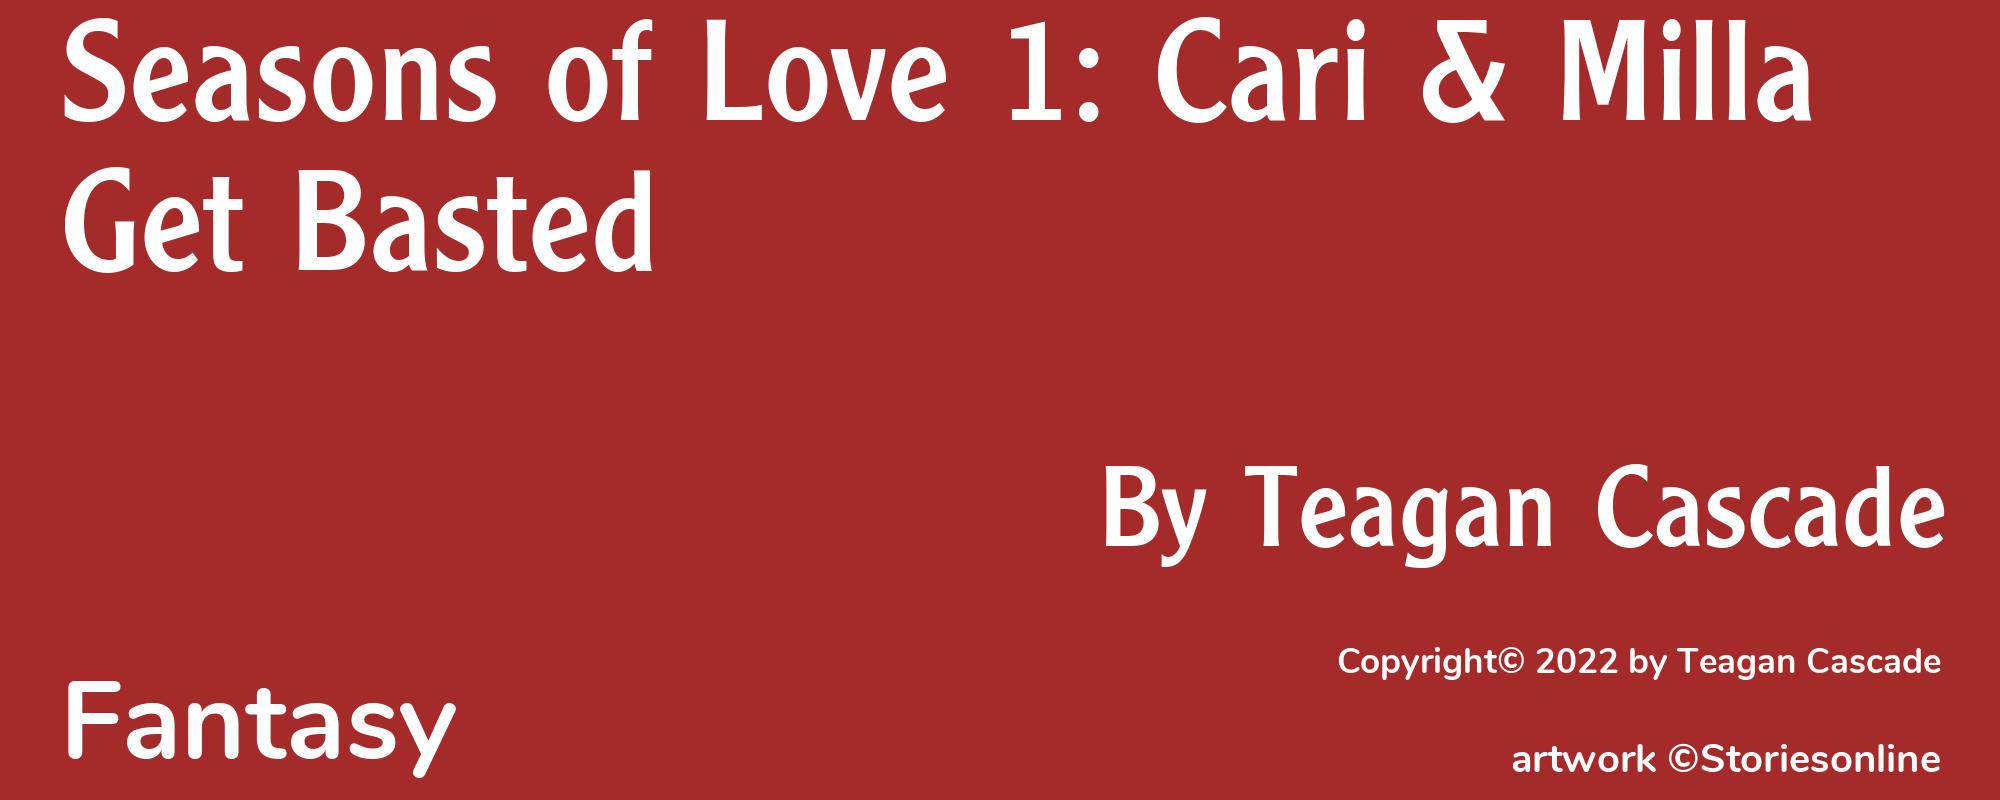 Seasons of Love 1: Cari & Milla Get Basted - Cover